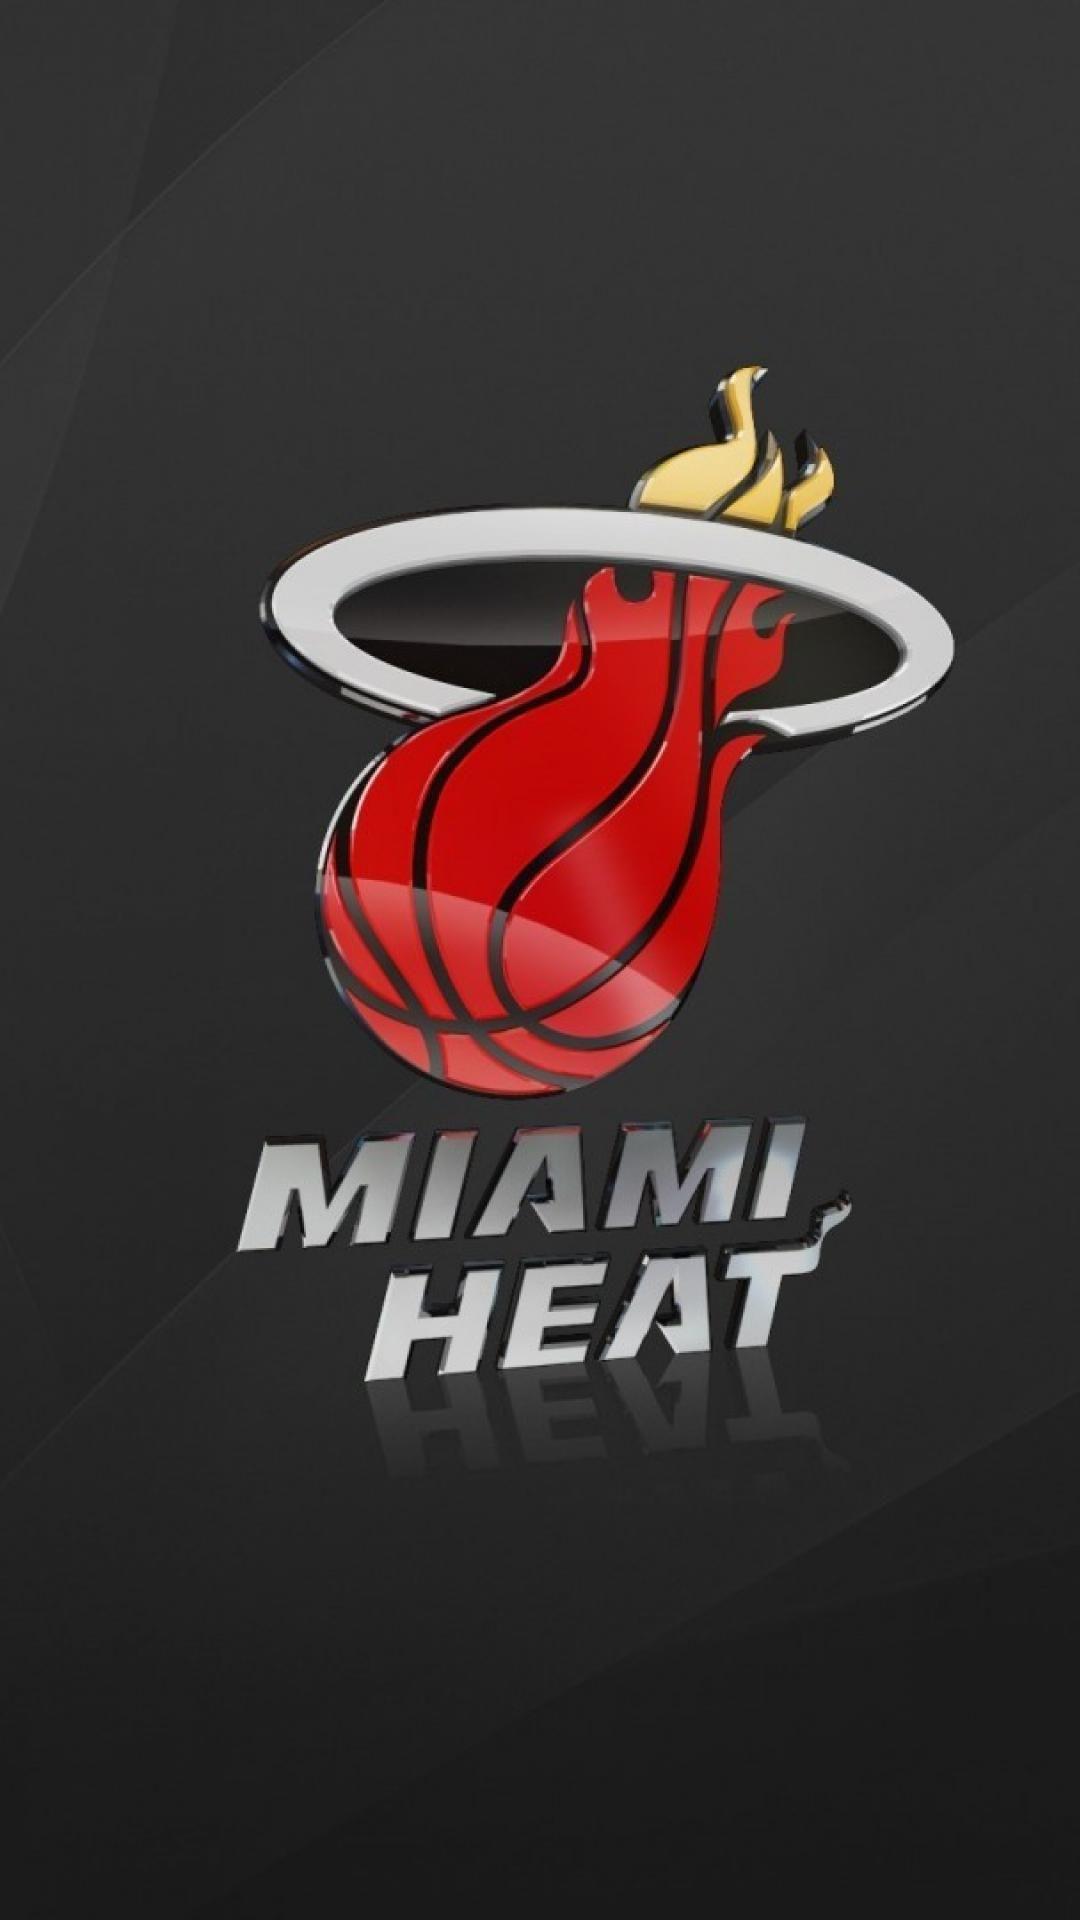 Miami heat logo wallpaper